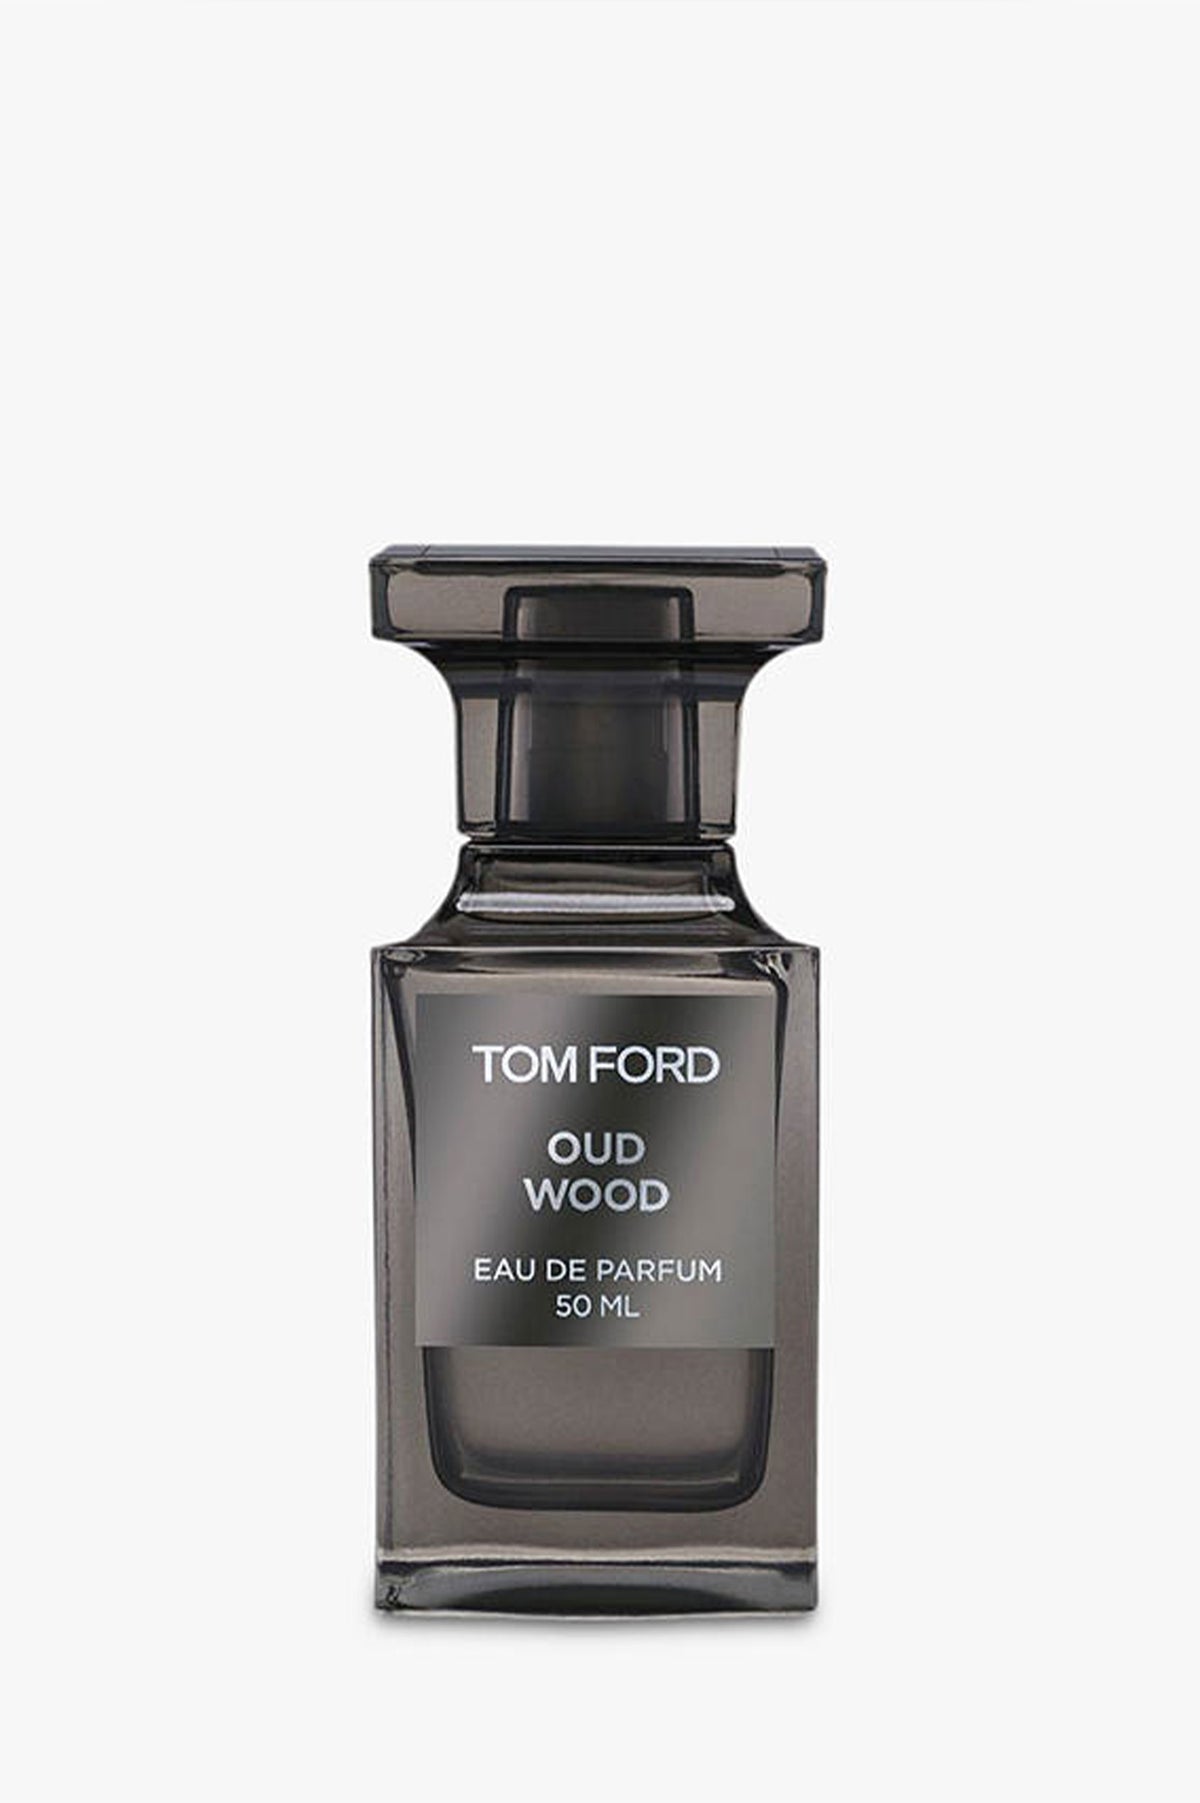 Tomford (oud wood)